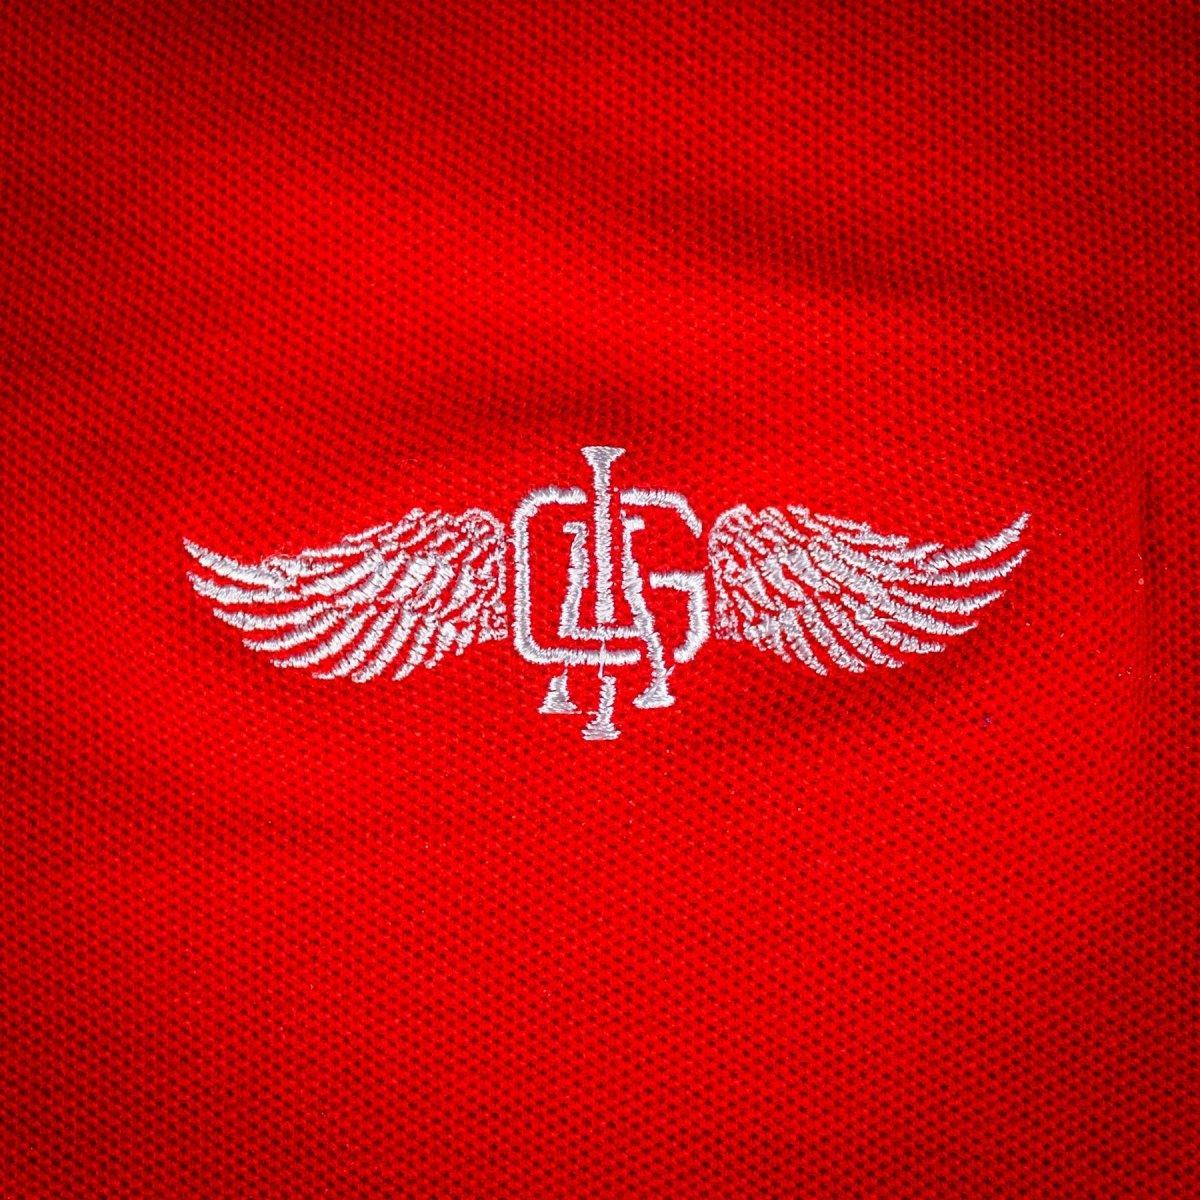 SONO Polo Shirt | Fiery Red - IronGrind Athletics - activewear - gymshark - alphalete